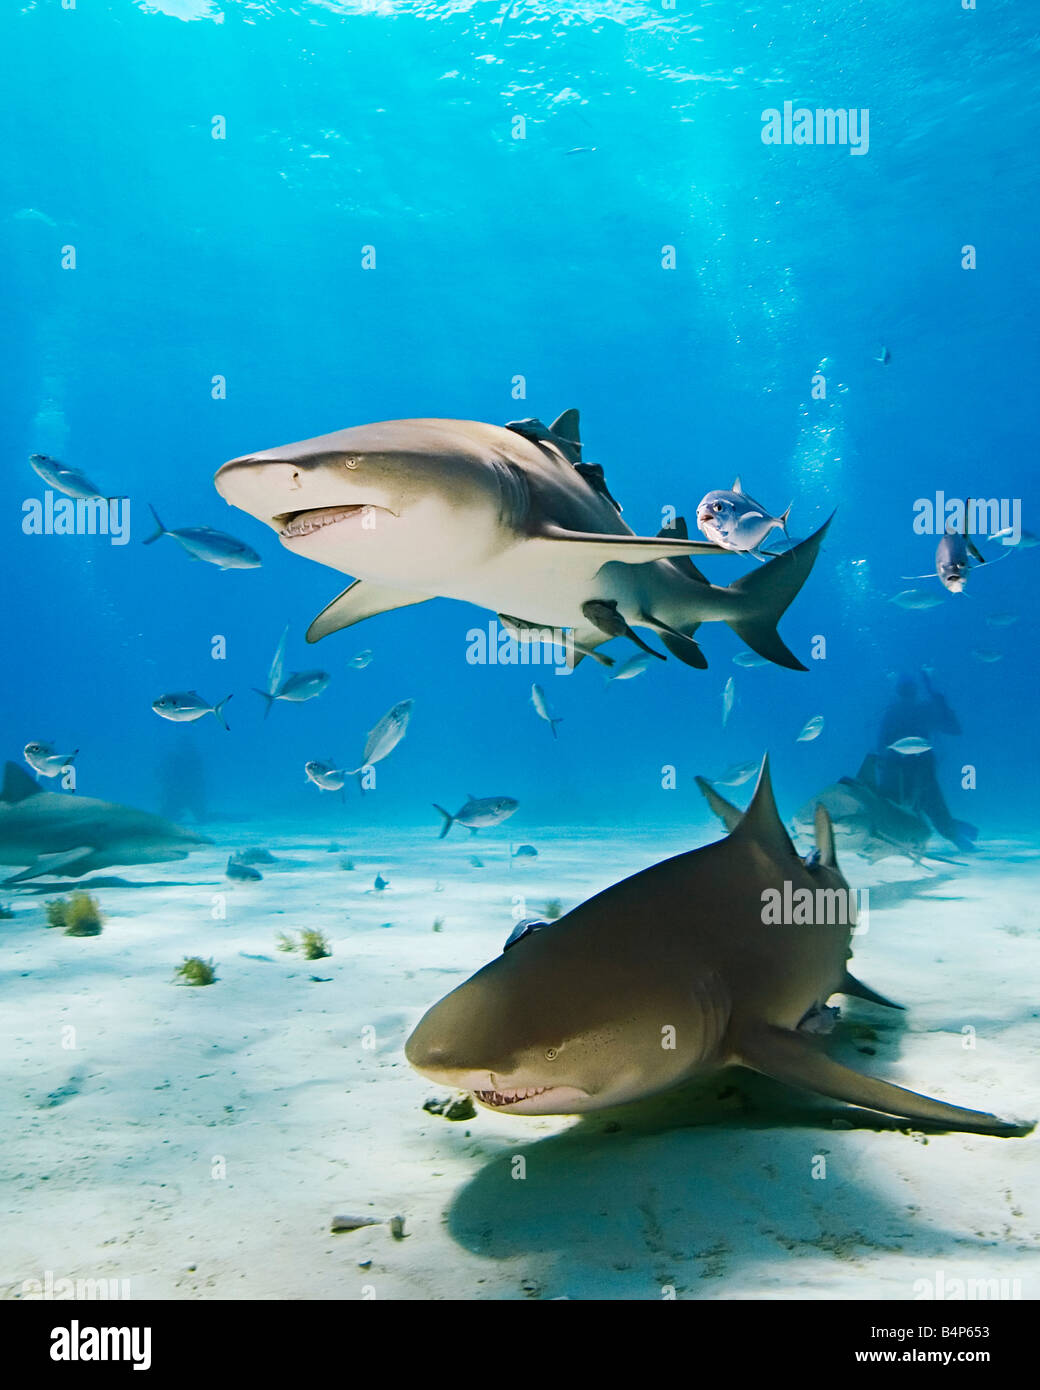 lemon sharks, Negaprion brevirostris, with sharksuckers, Echeneis naucrates, blue runner jacks, Caranx crysos, and scuba divers Stock Photo